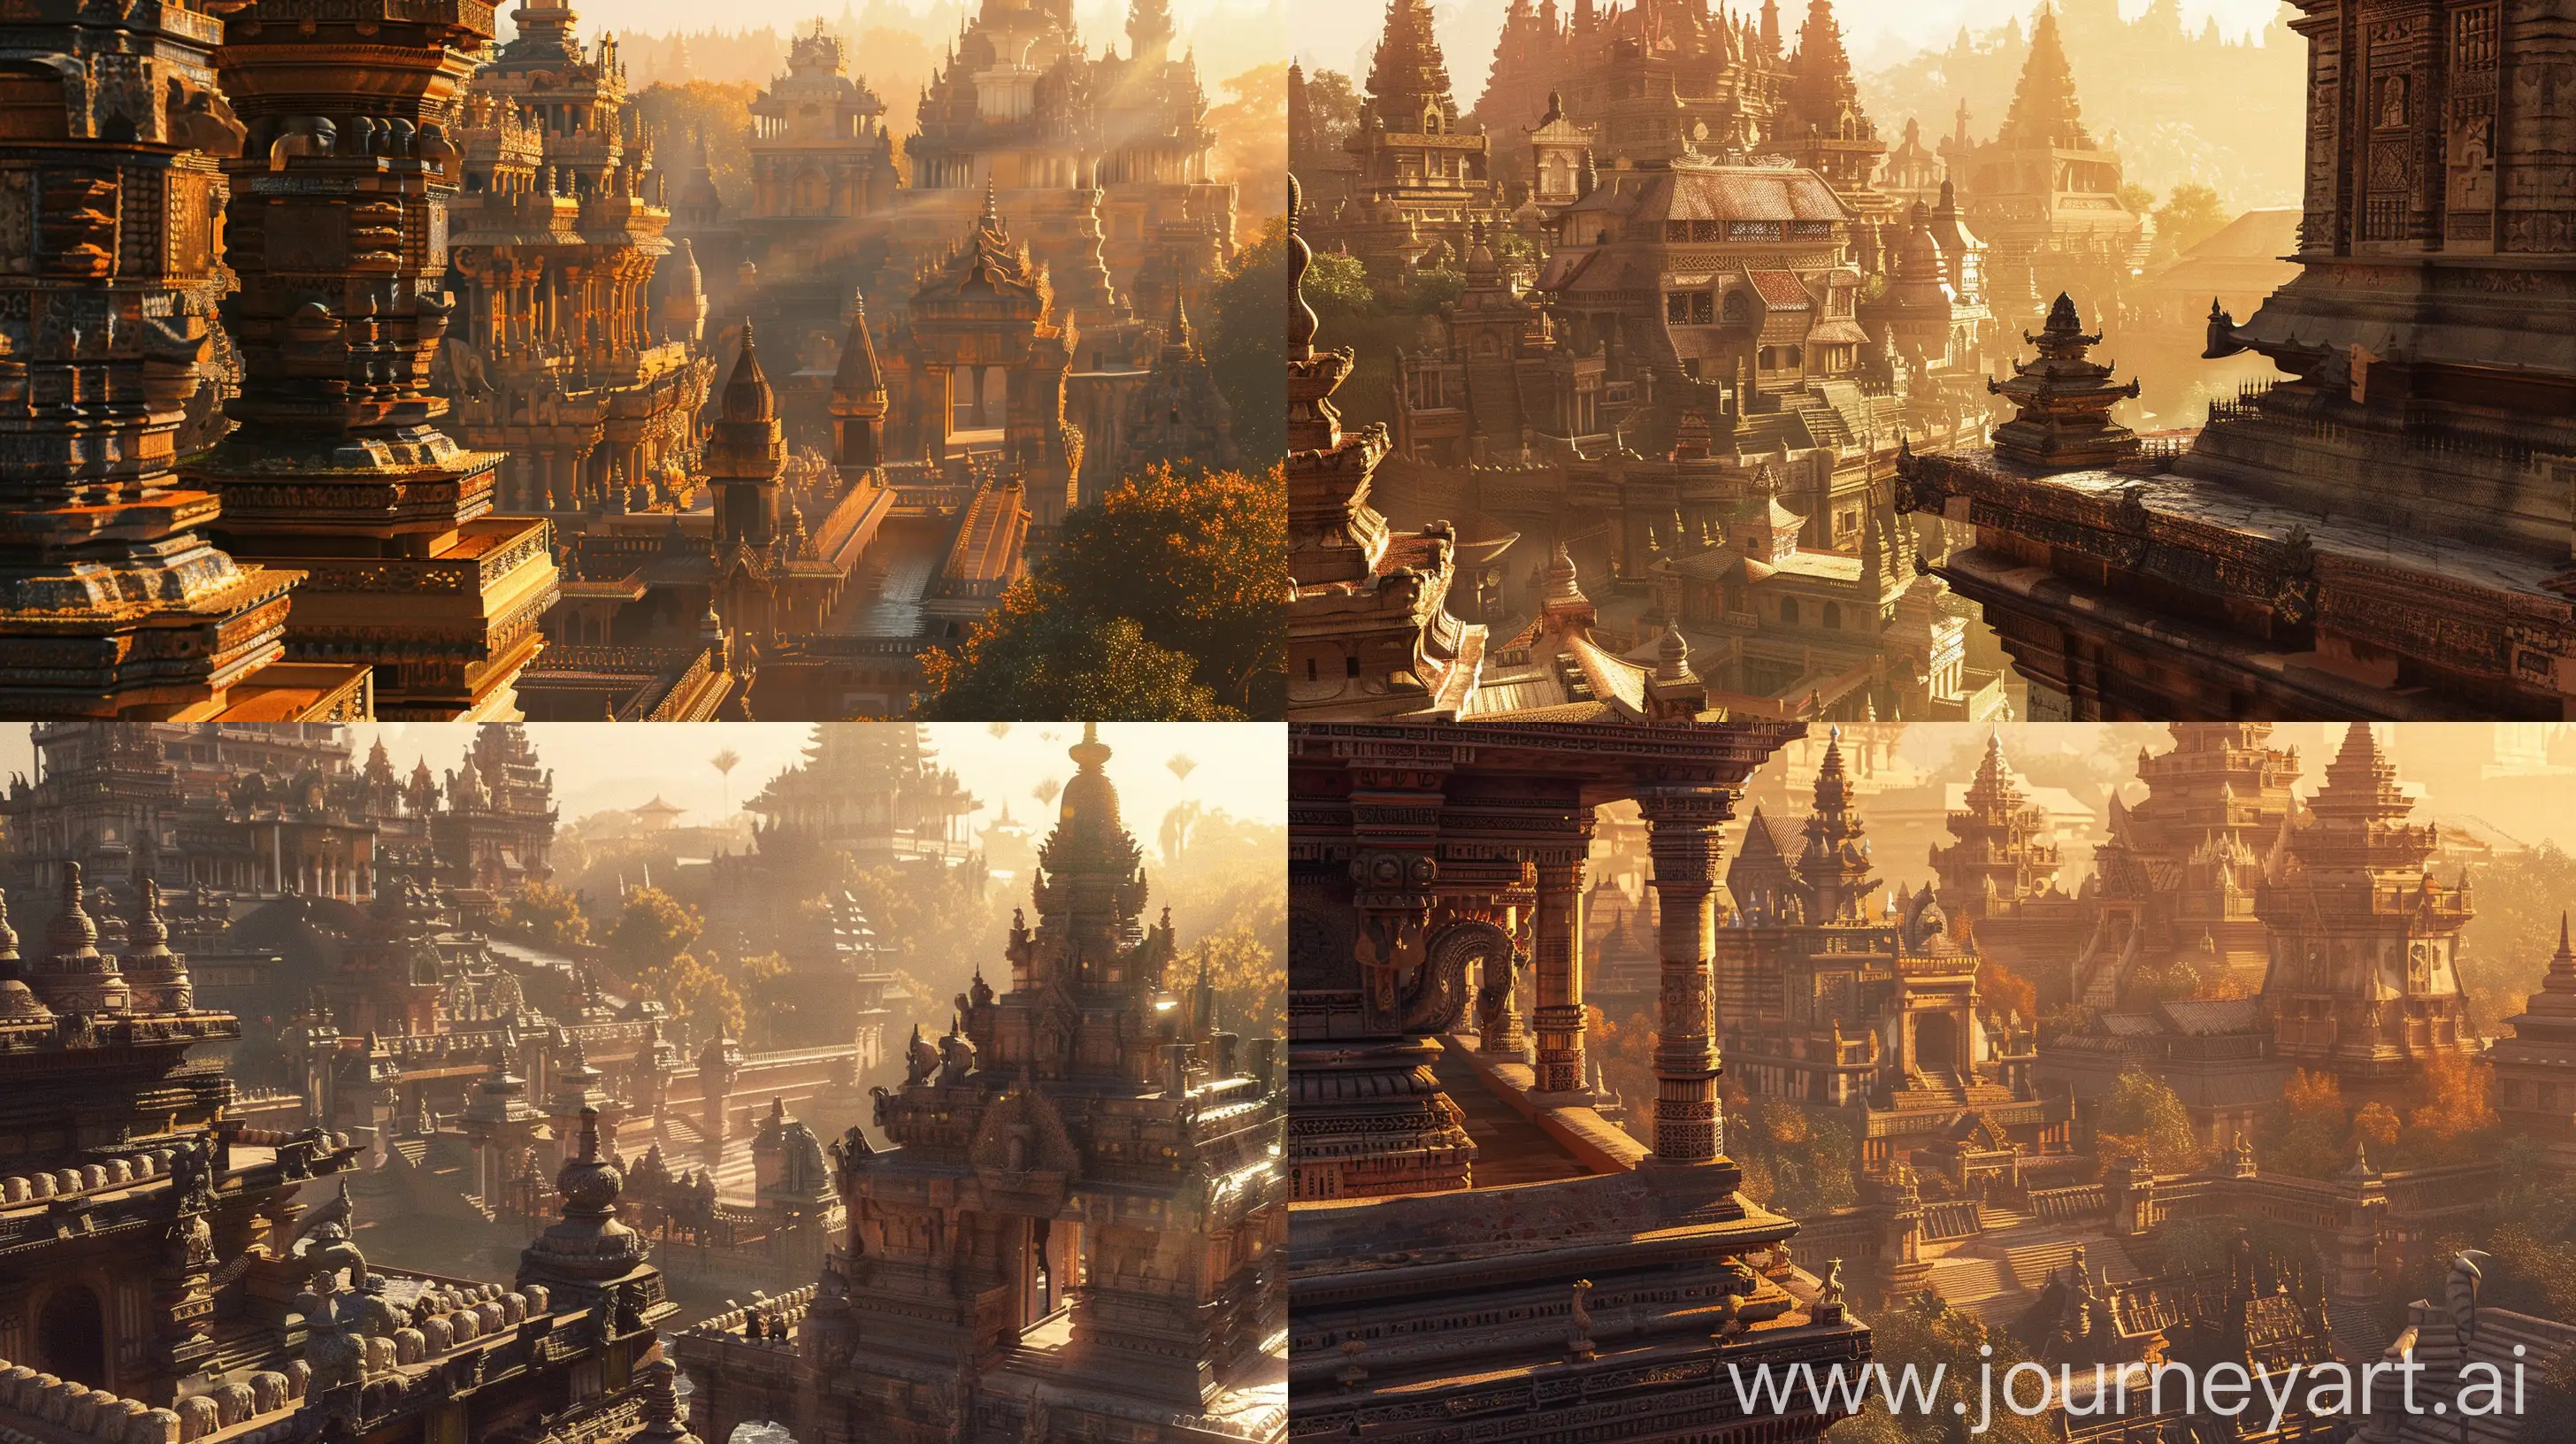 16thCentury-Sunda-Kingdom-Grandiose-Palaces-and-Towering-Temples-in-Warm-Sunlight